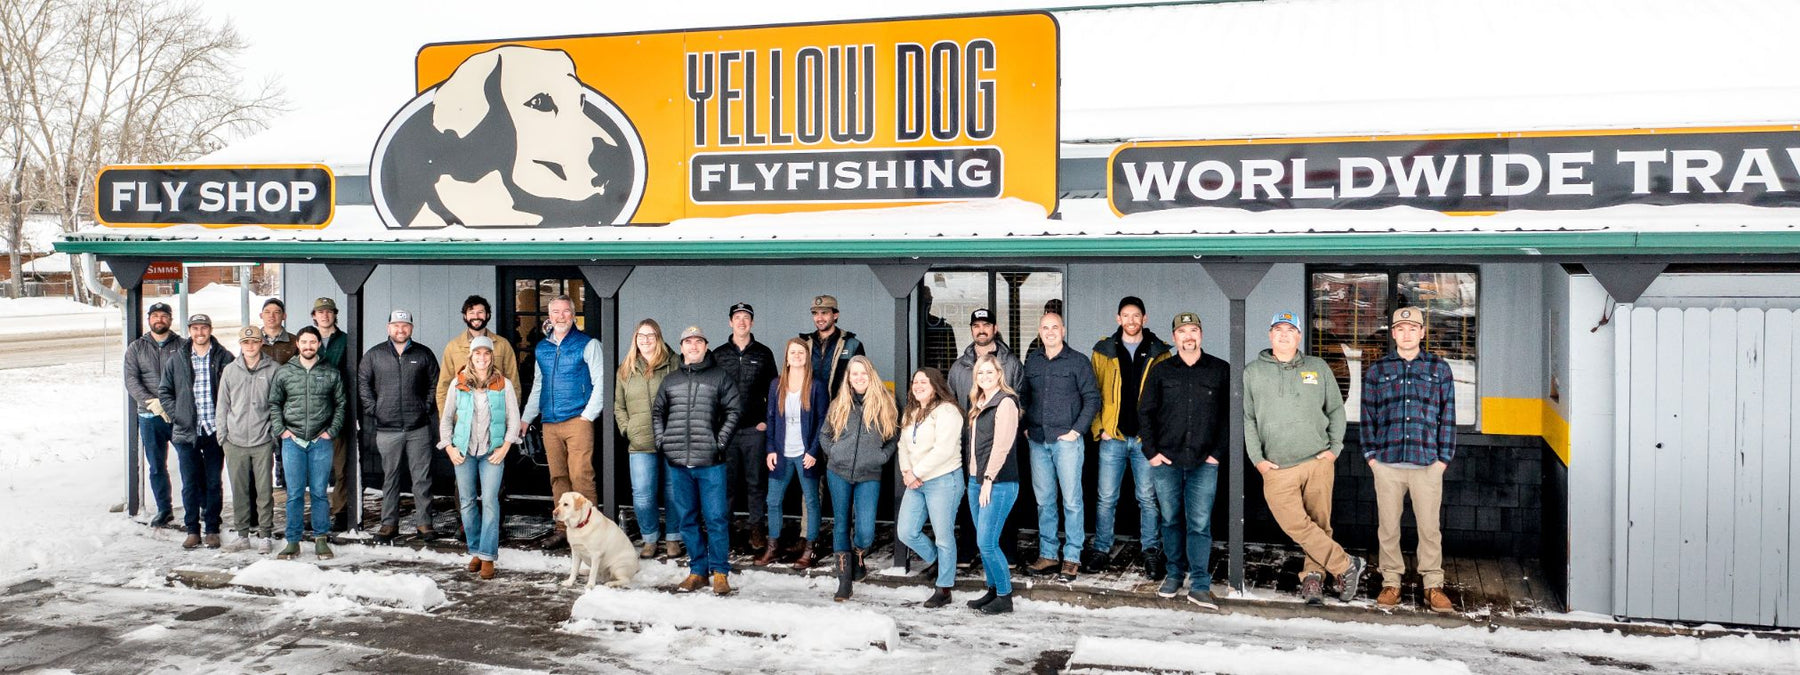 Meet the Yellow Dog Flyfishing Team